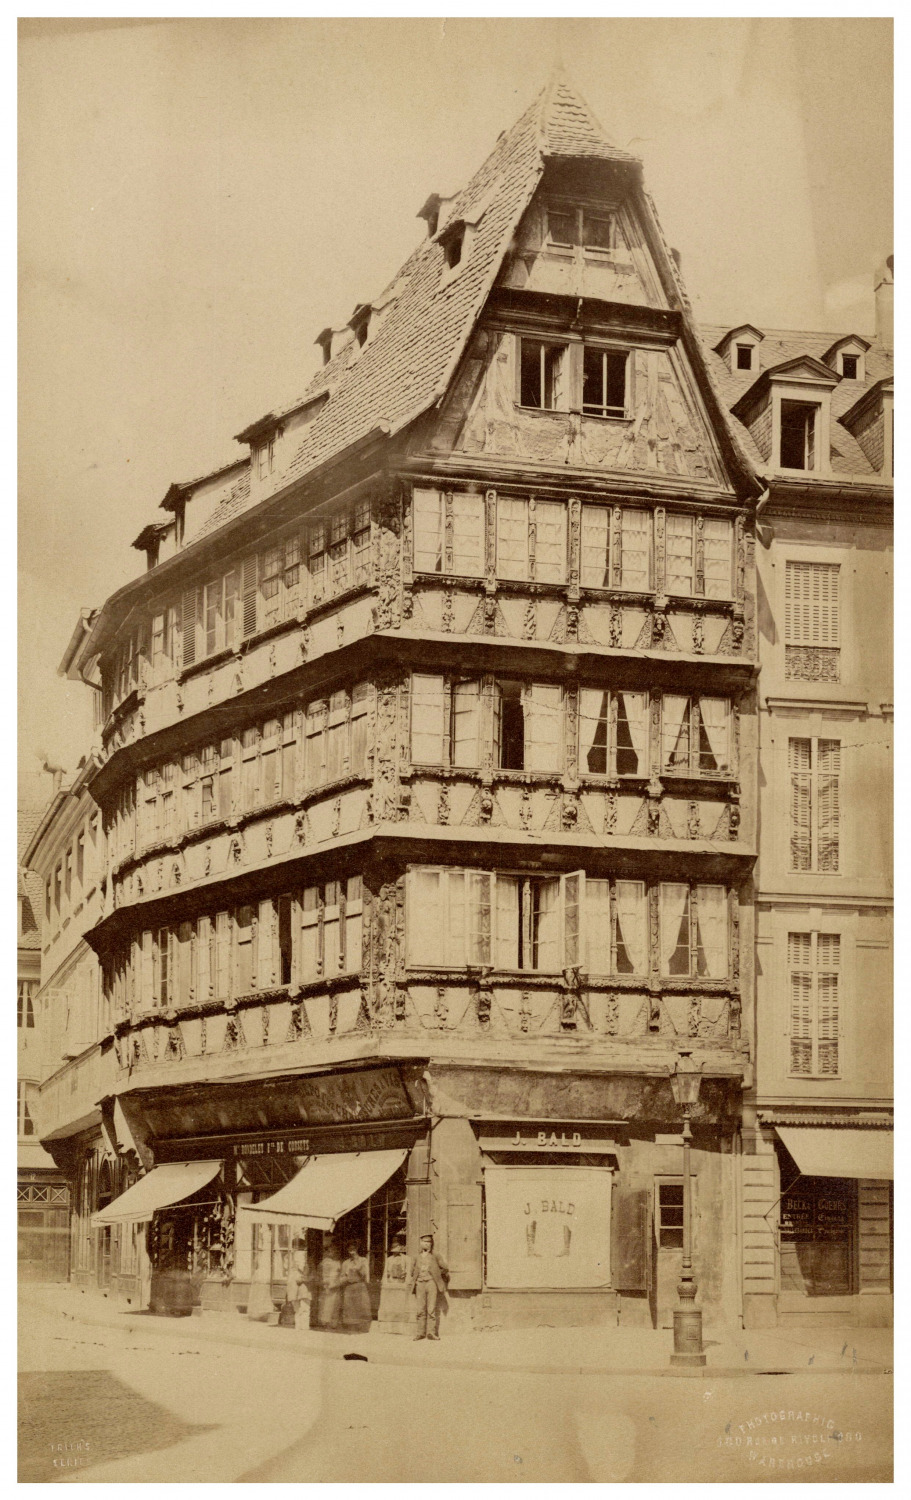 France, Strasbourg, Maison Kammerzell Vintage Print, Albumin Print 26x16